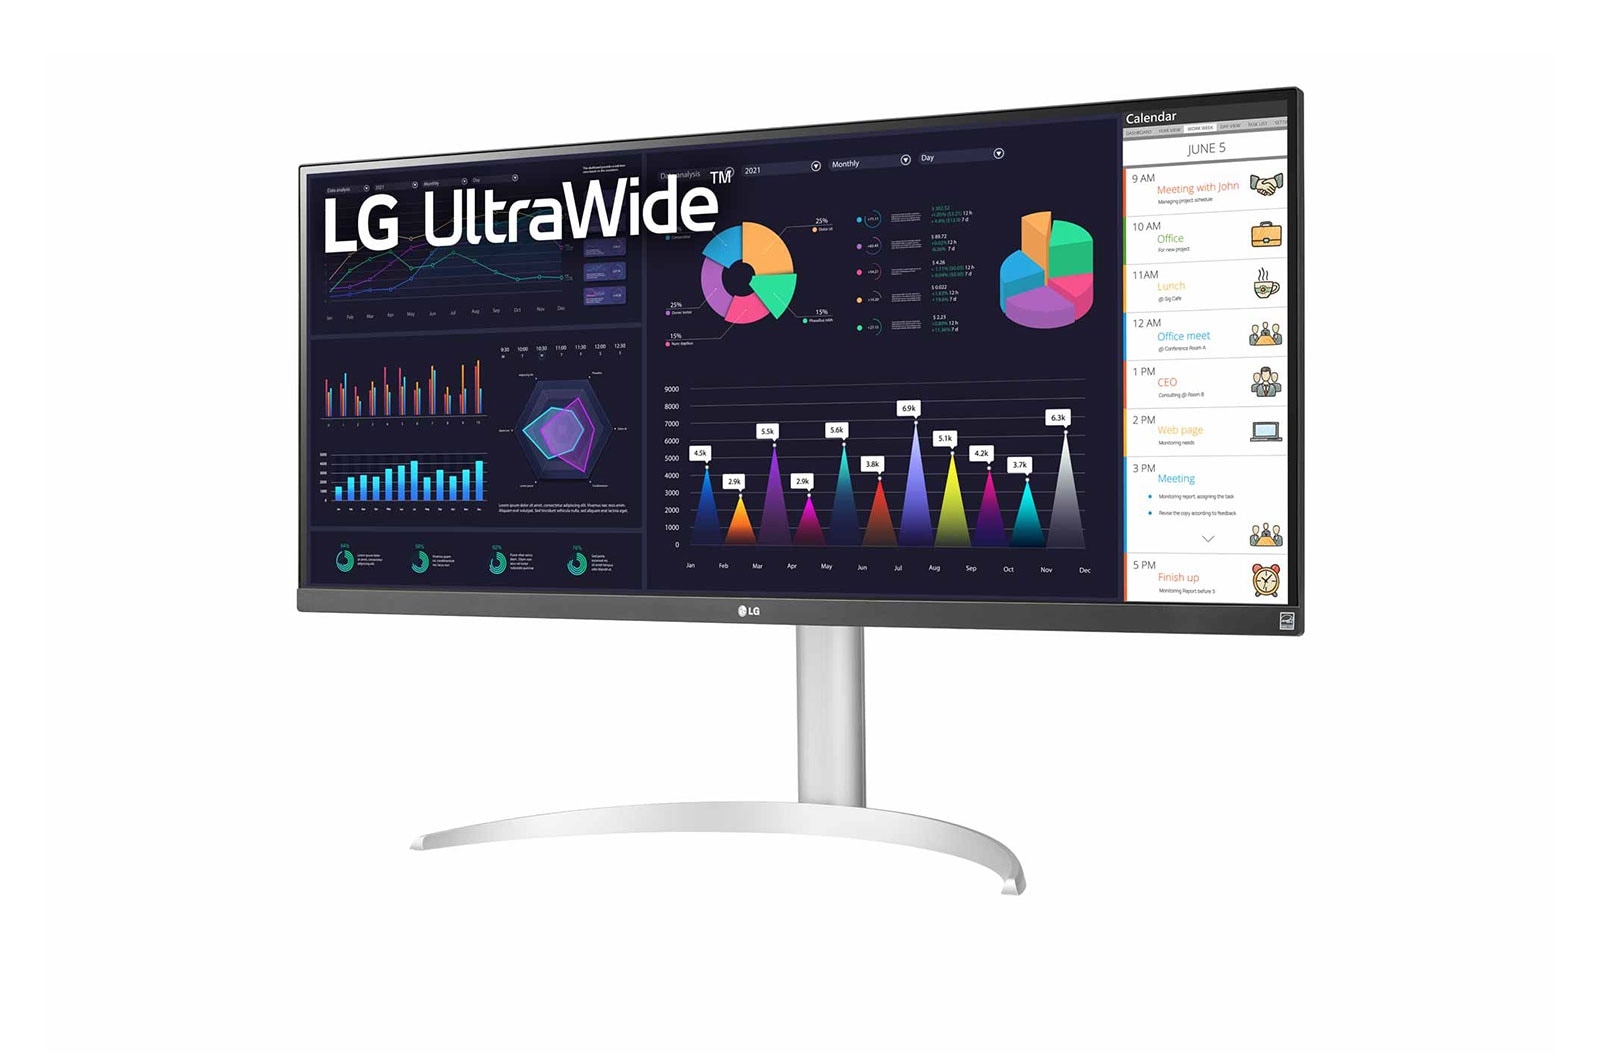 LG 34WN650-W UltraWide Monitor 34 21:9 FHD (2560 x 1080) IPS Display, VESA  DisplayHDR 400, AMD FreeSync, 3-Side Virtually Borderless Design - Silver